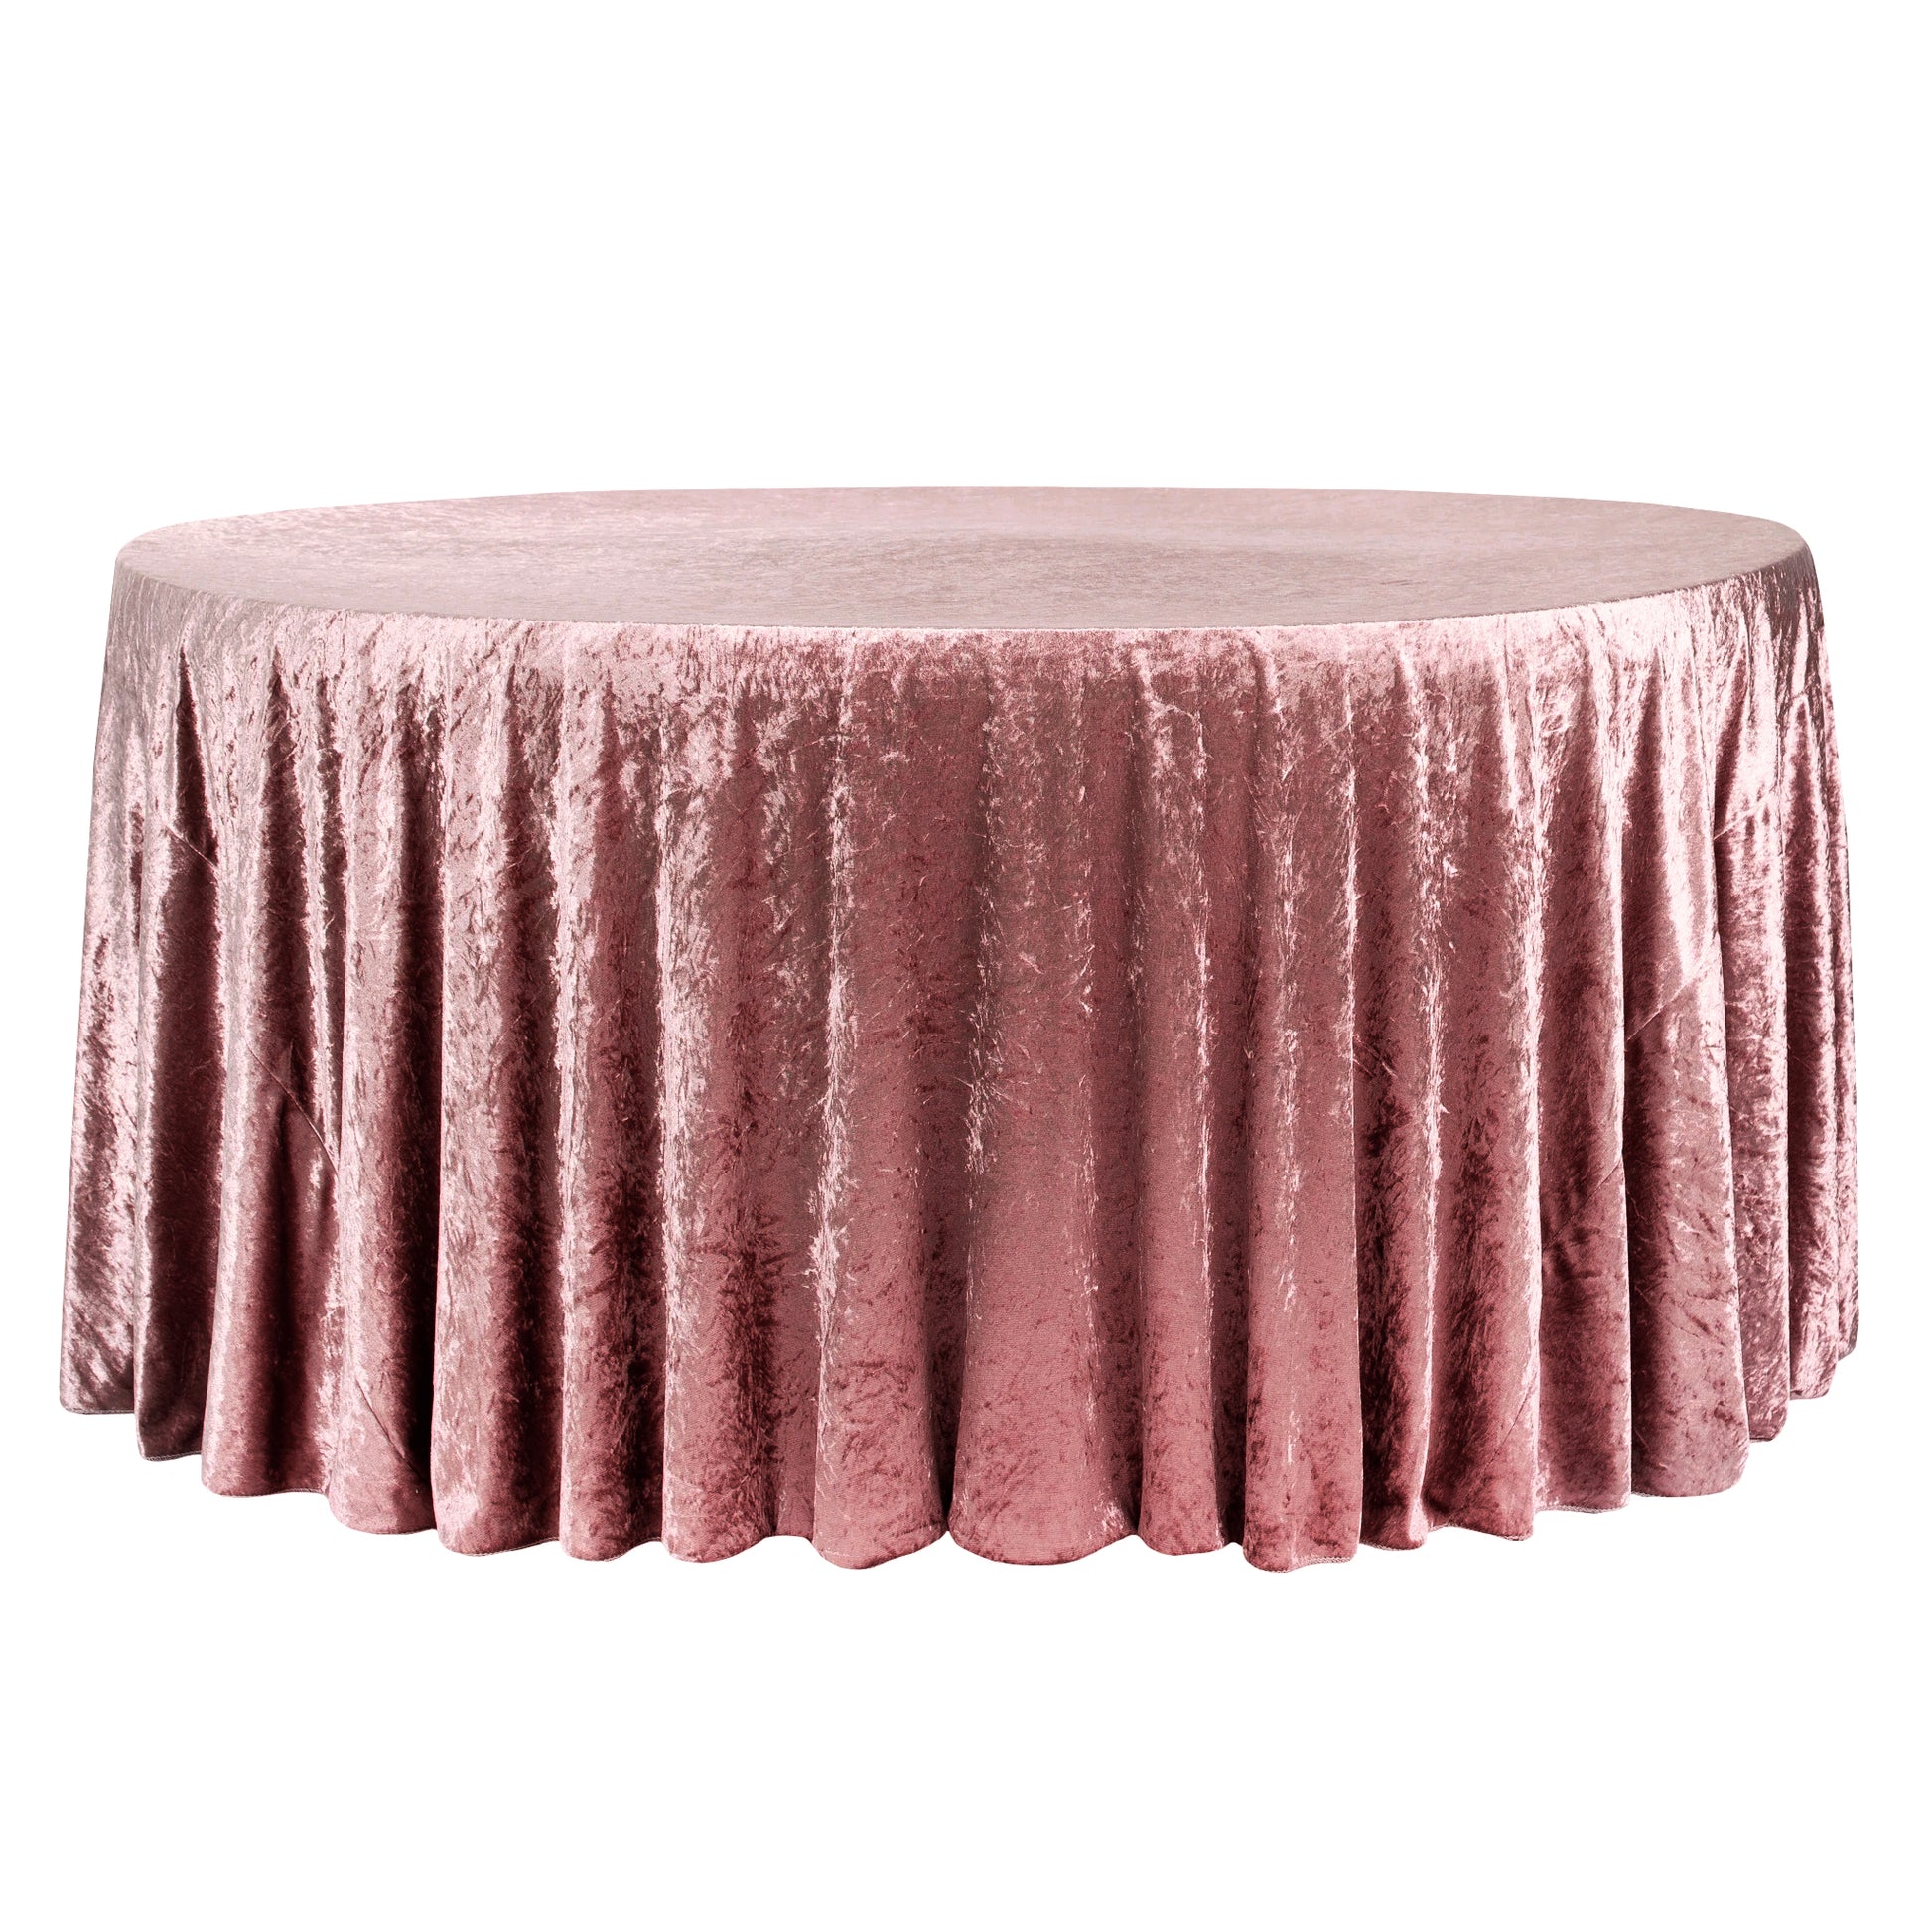 Velvet 132" Round Tablecloth - Dark Dusty Rose/Mauve - CV Linens